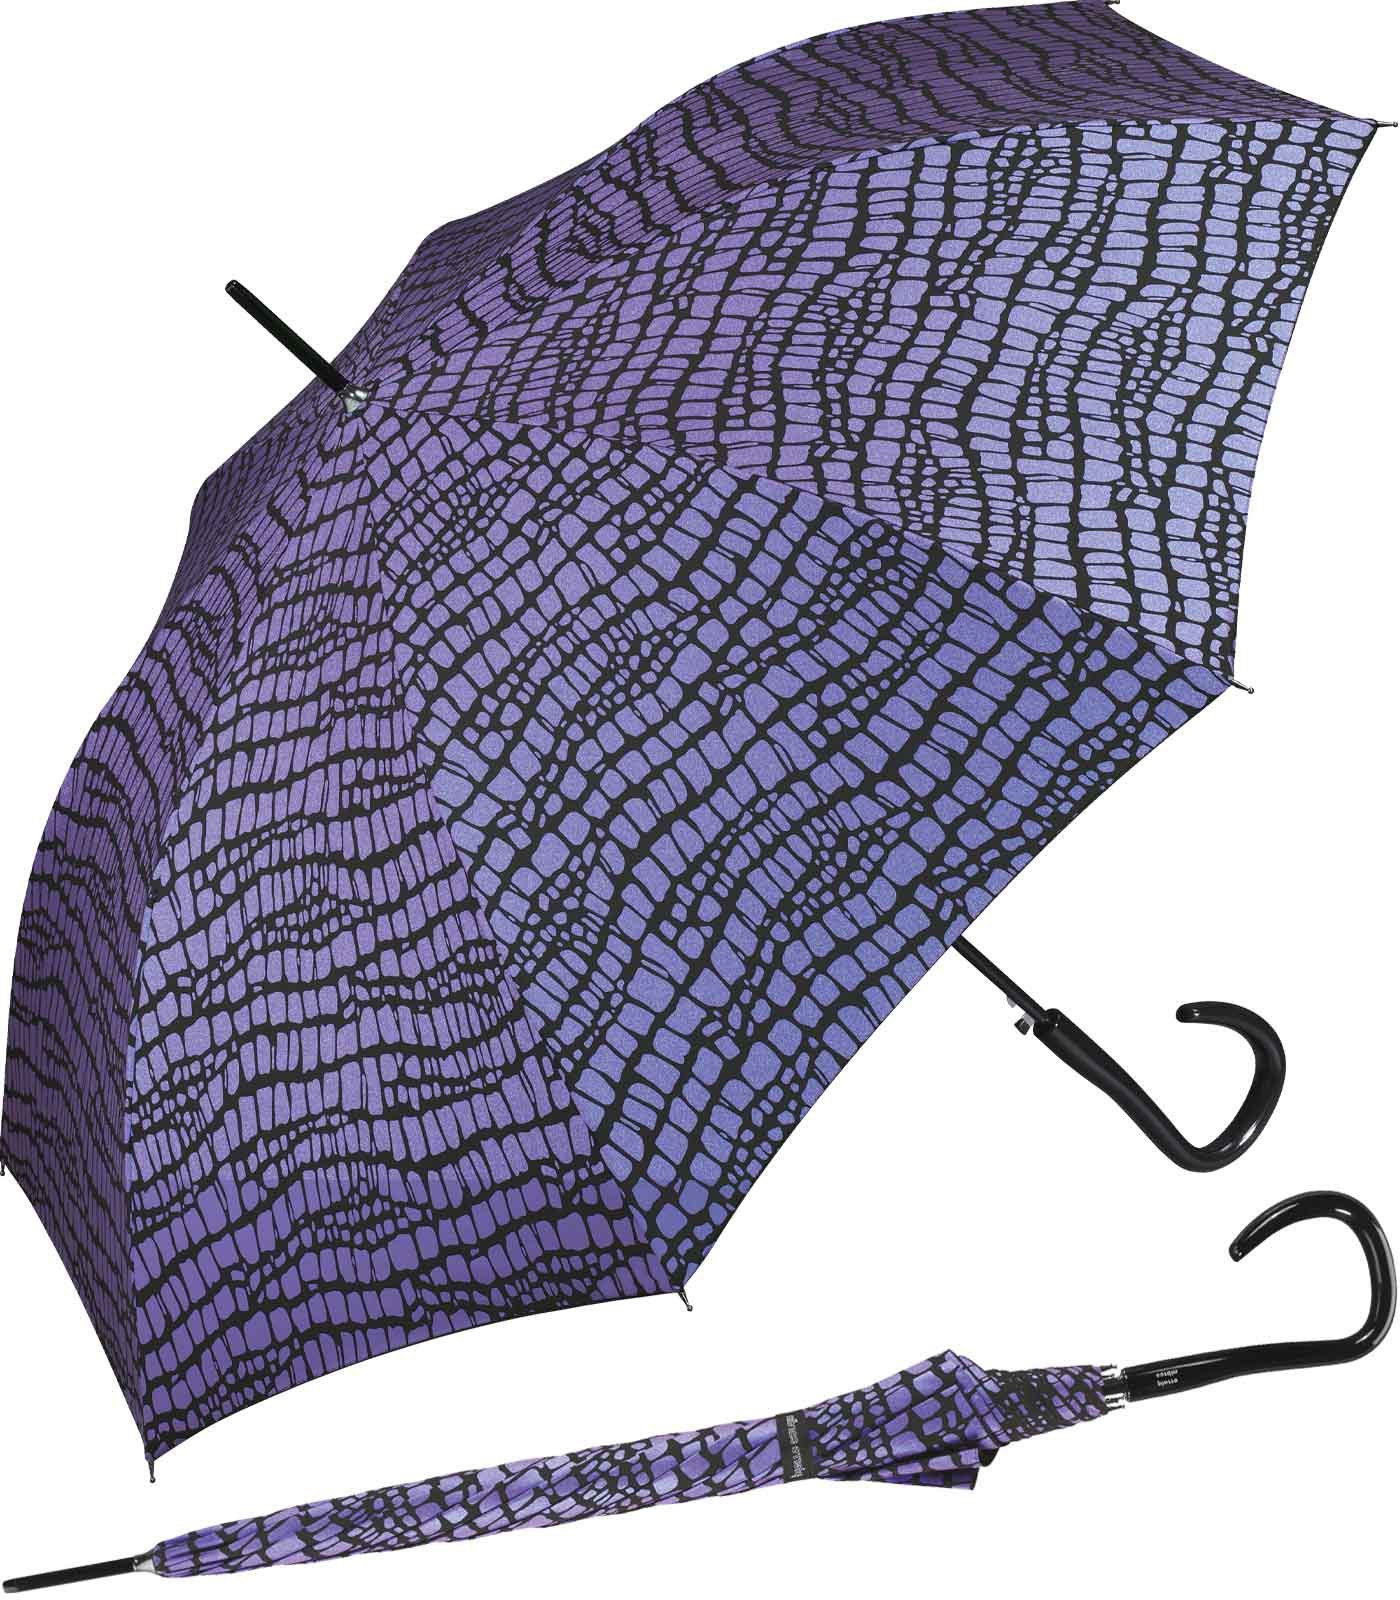 Pierre Cardin Langregenschirm großer Damen-Regenschirm mit Auf-Automatik, Krokodil-Optik für den Regenschirm lila-schwarz